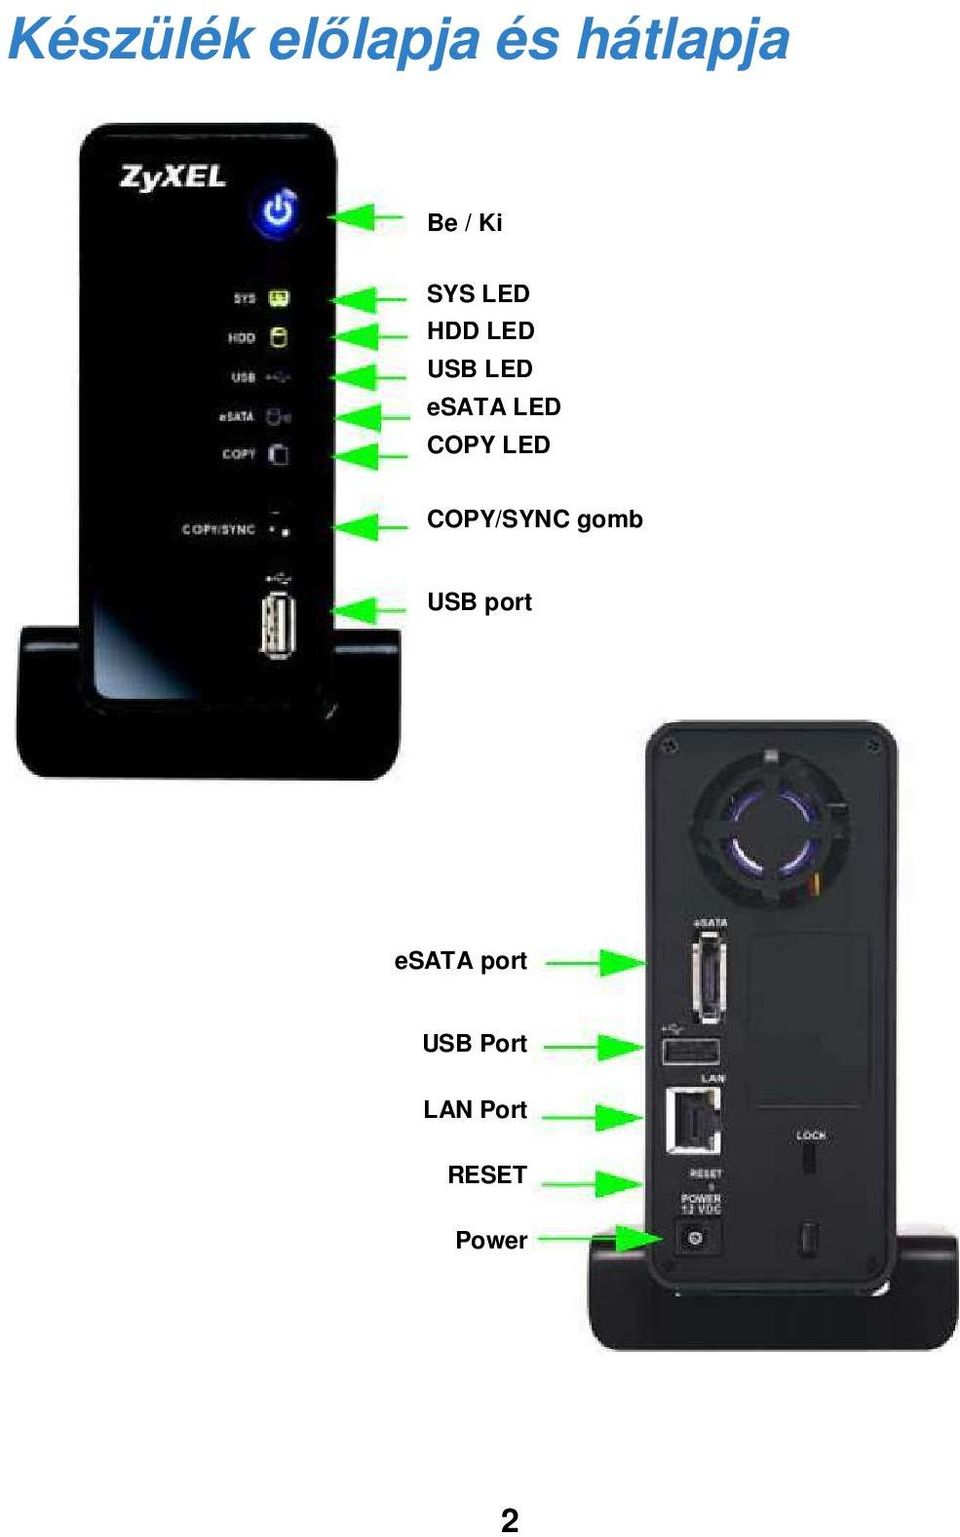 COPY LED COPY/SYNC gomb USB port